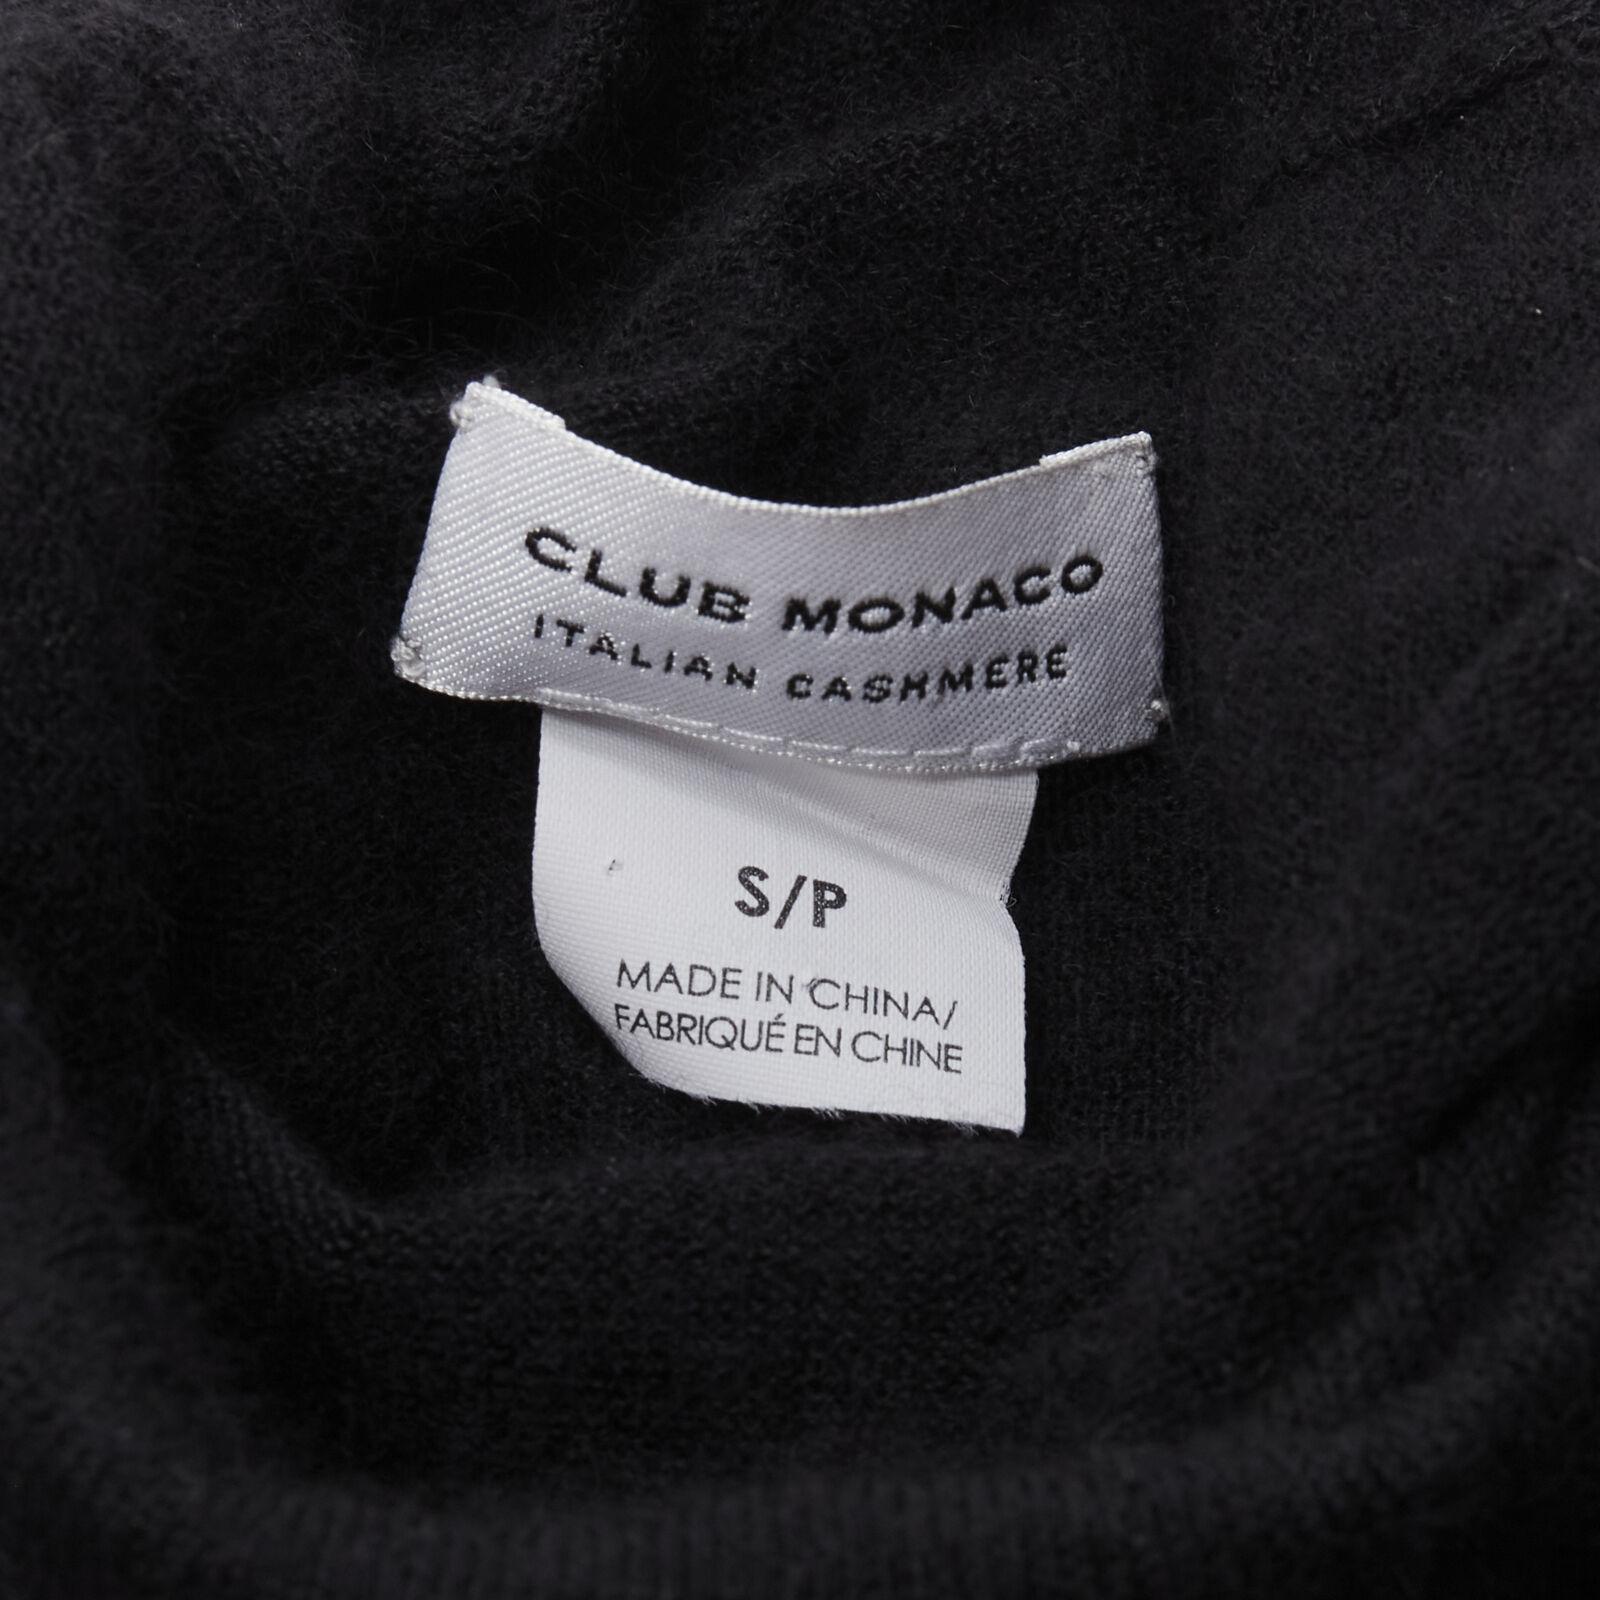 CLUB MONACO 100% Italian cashmere black turtleneck long sleeves sweater S For Sale 5